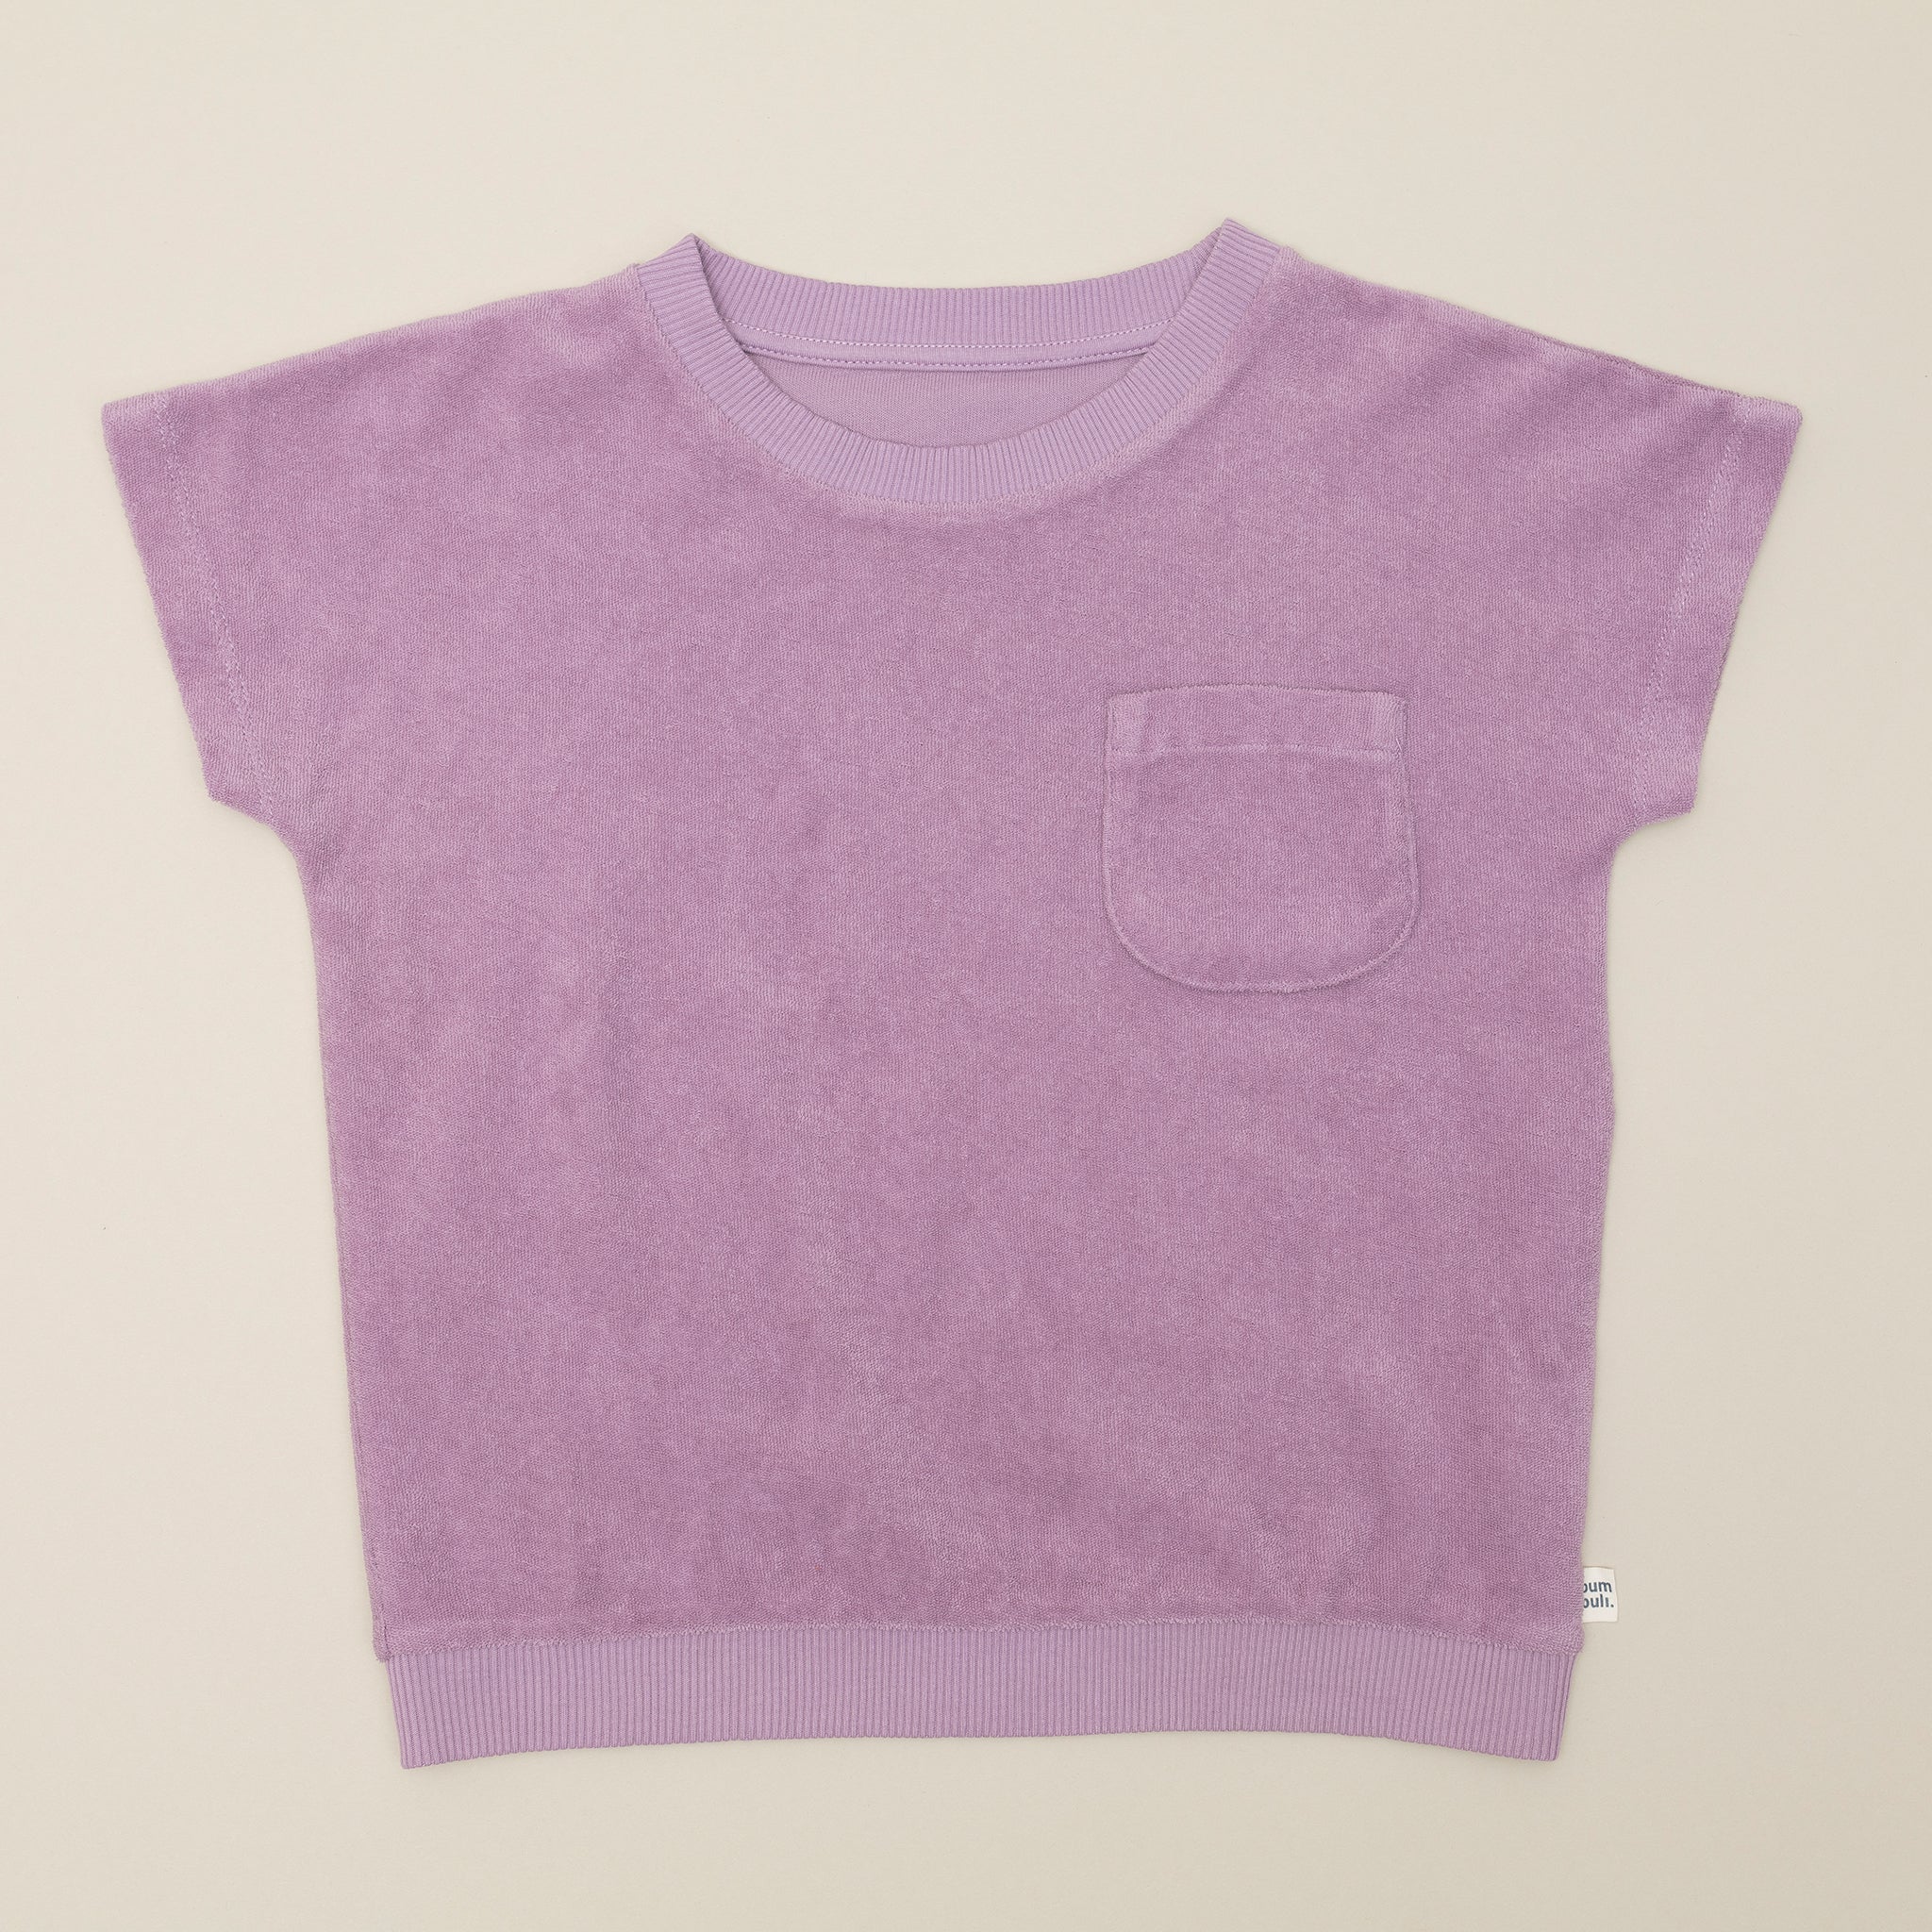 Nachtwäsche Terry Summer Shirt Purple Rose - studio bumbuli 32.00